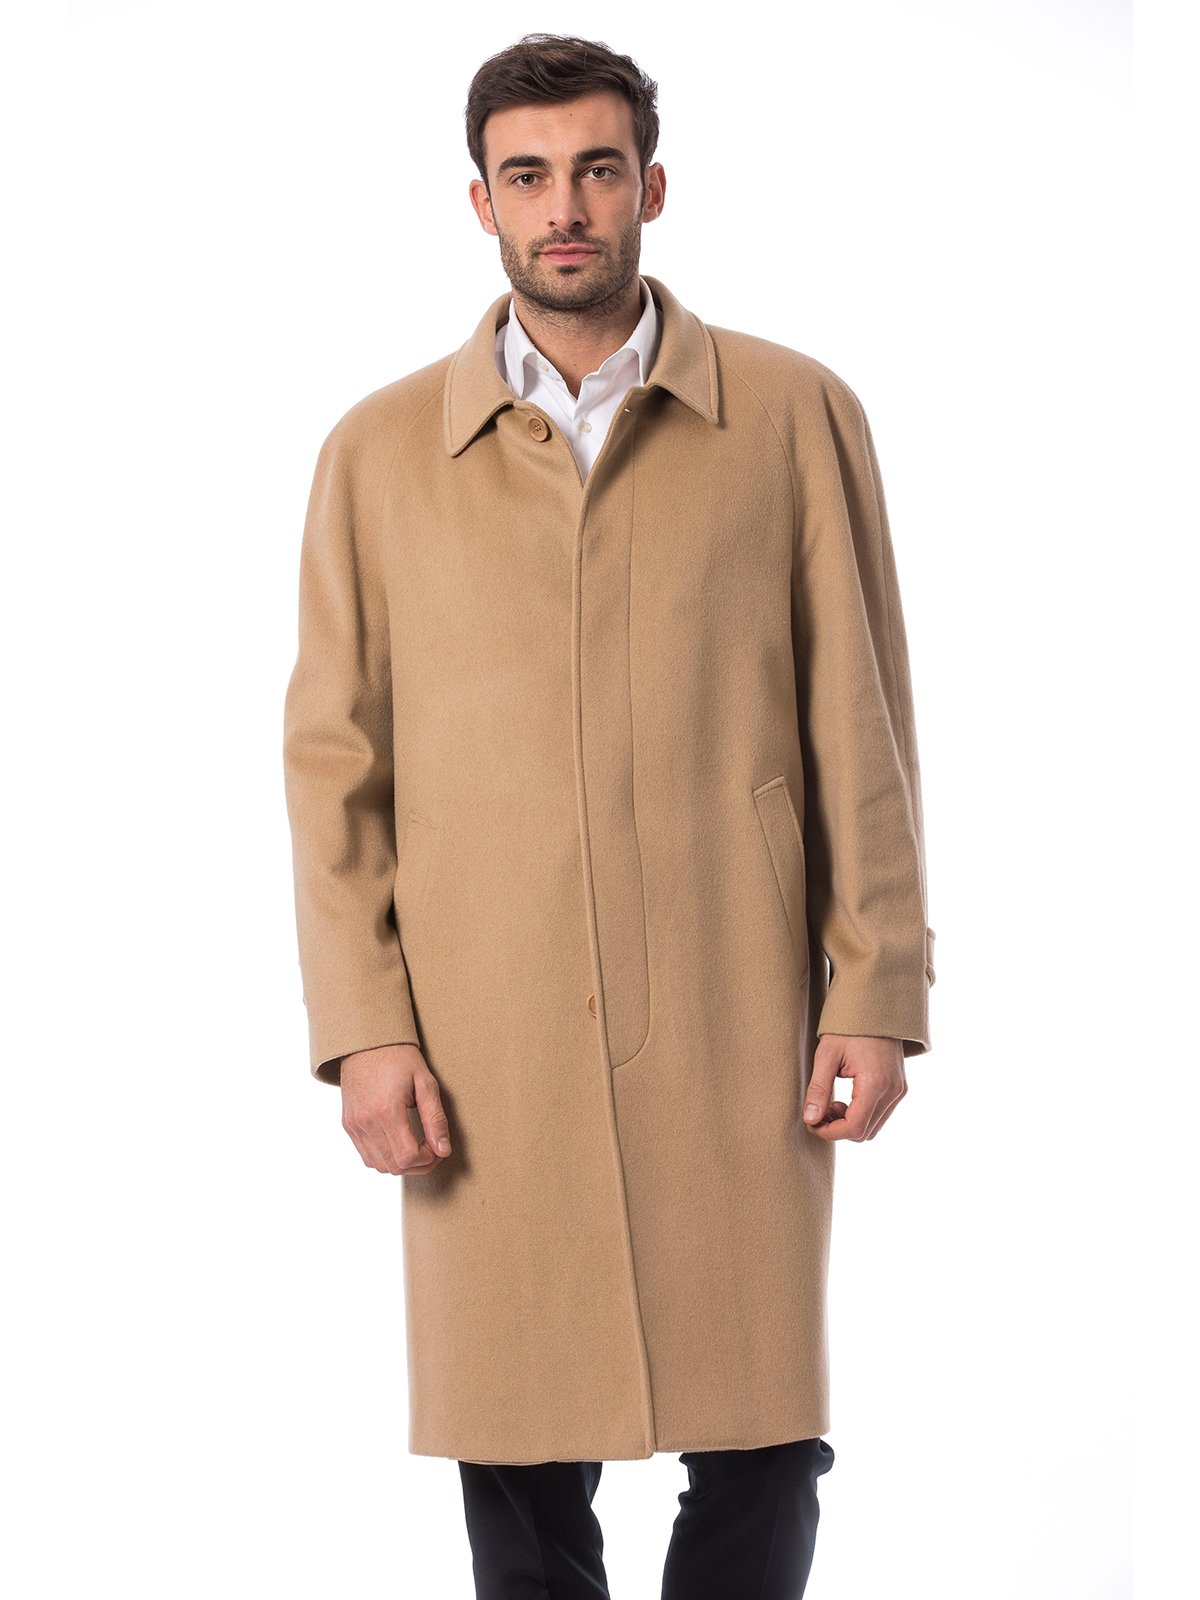 Пальто реглан мужское. Кашемировое пальто мужское кэмел. Пальто мужское 2024 цвет кэмел. Длинное мужское пальто кэмел. Мужское пальто цвета кэмел.